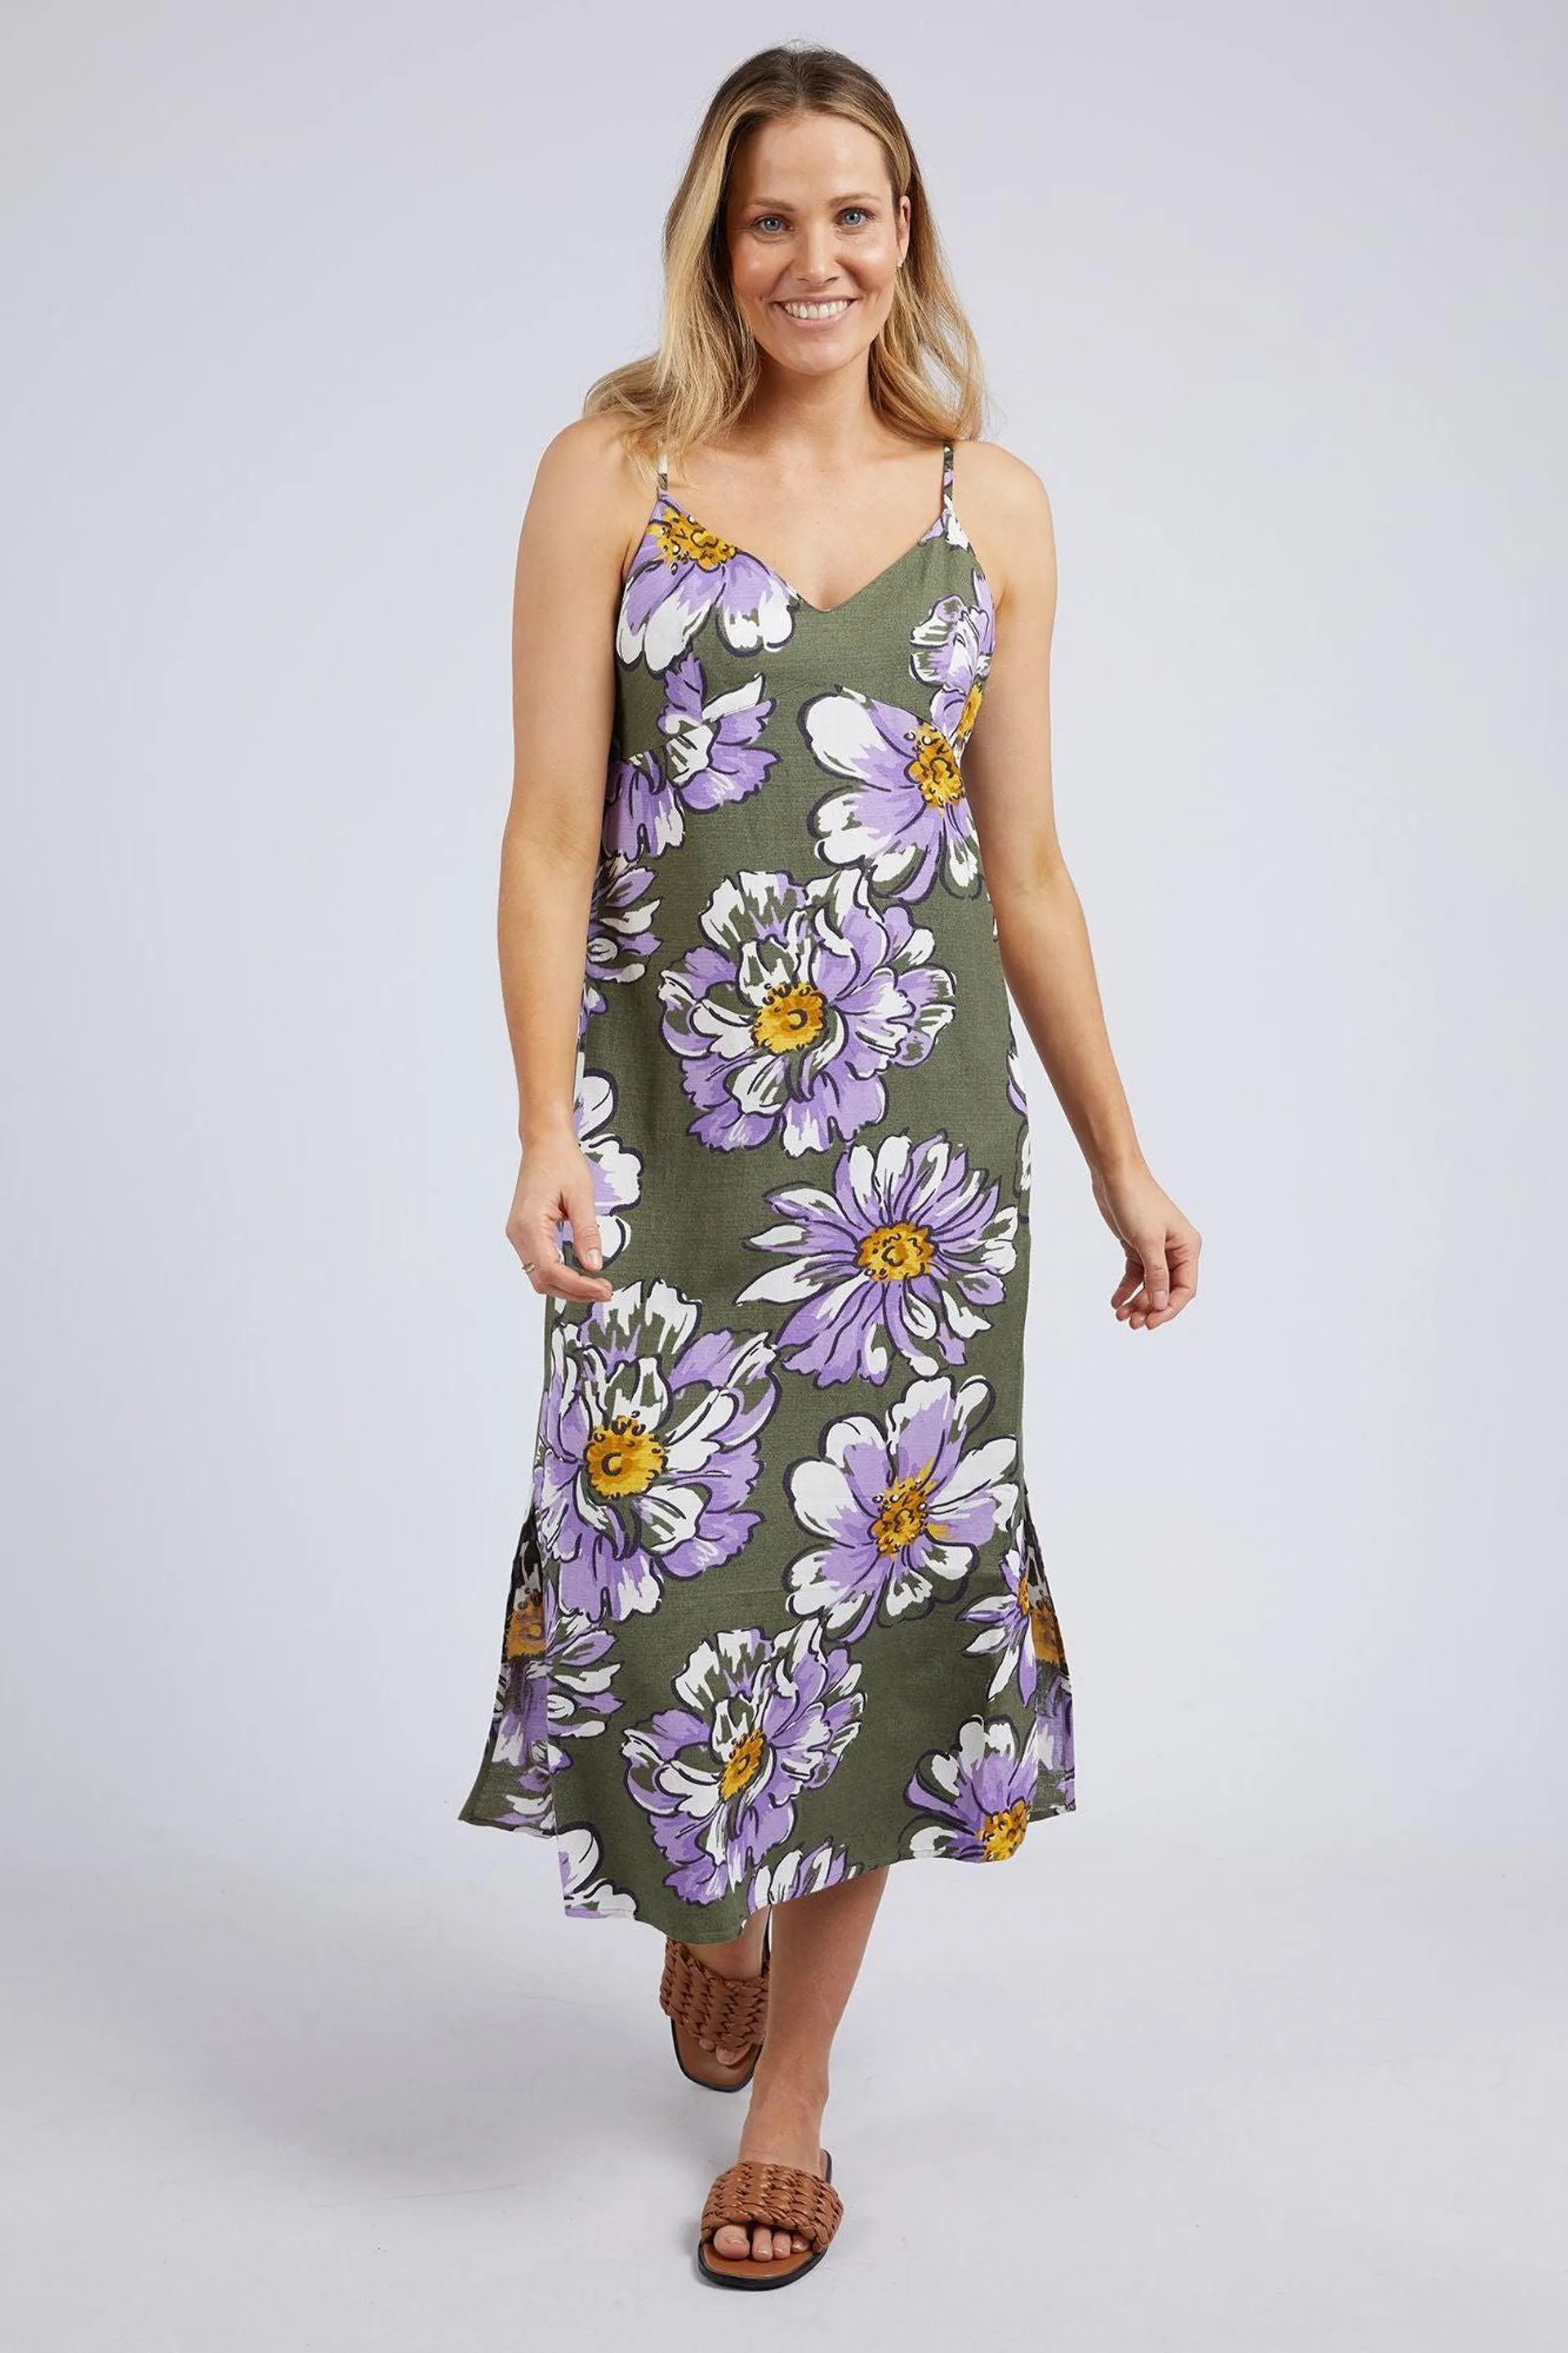 Antheia Floral Slip Dress | Antheia Floral